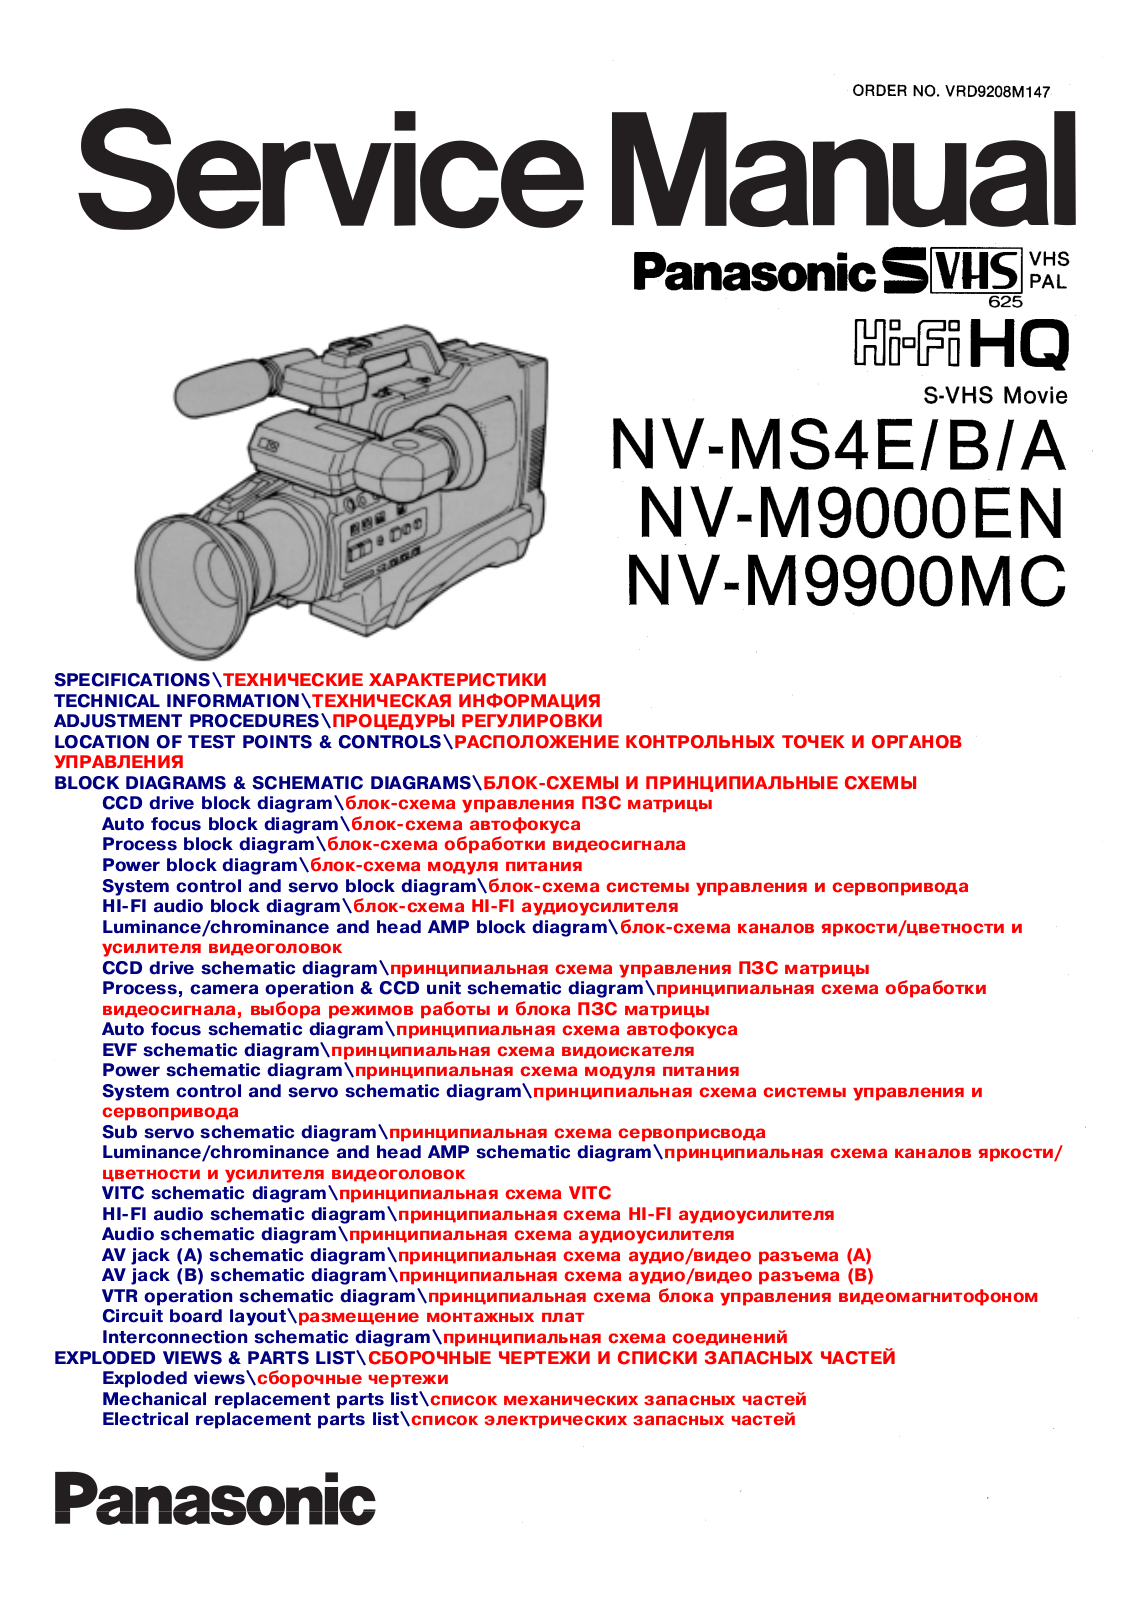 Panasonic NV-M9000, NV-M9900 Service Manual